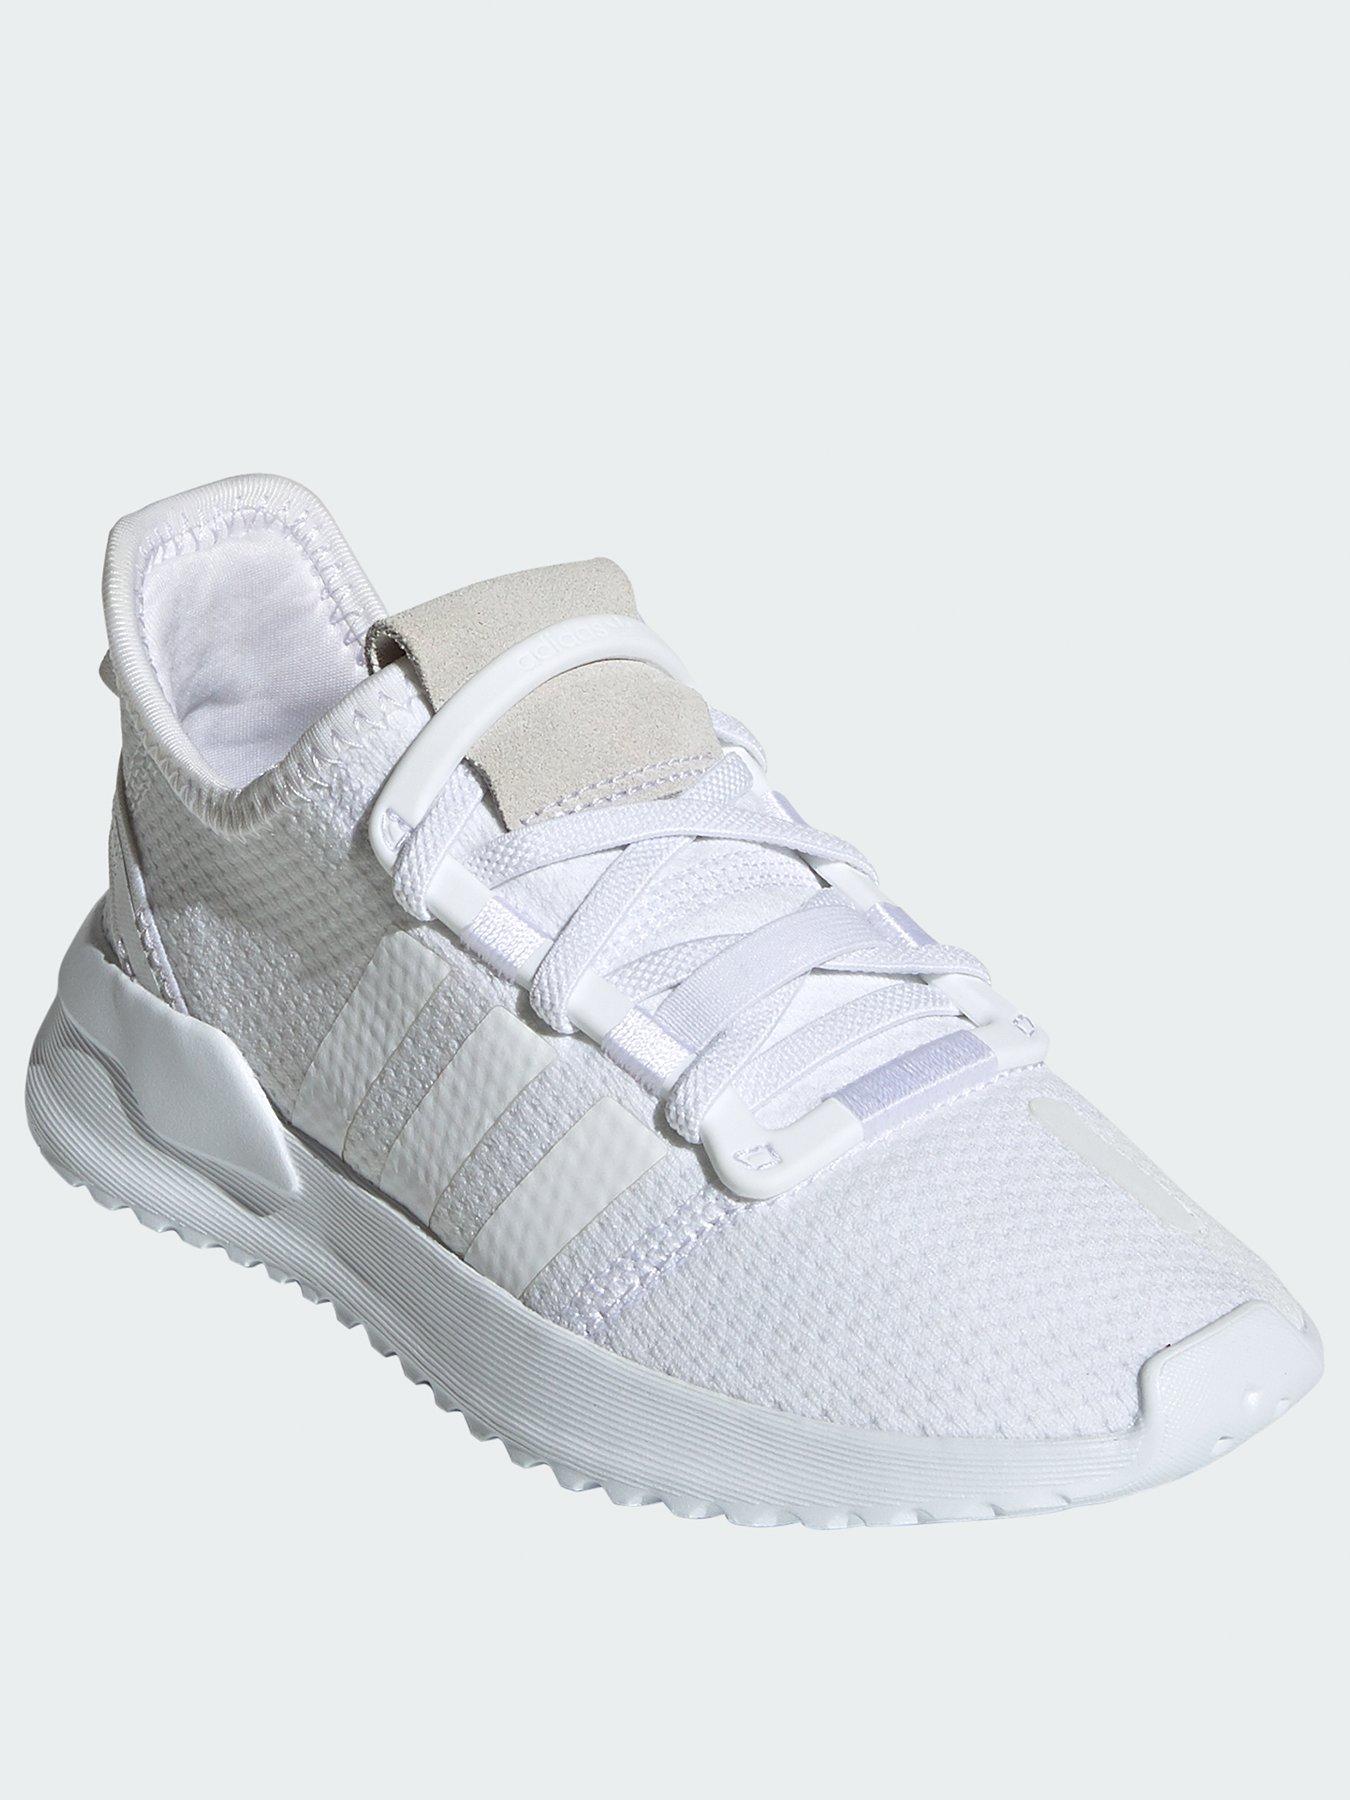 adidas new white trainers